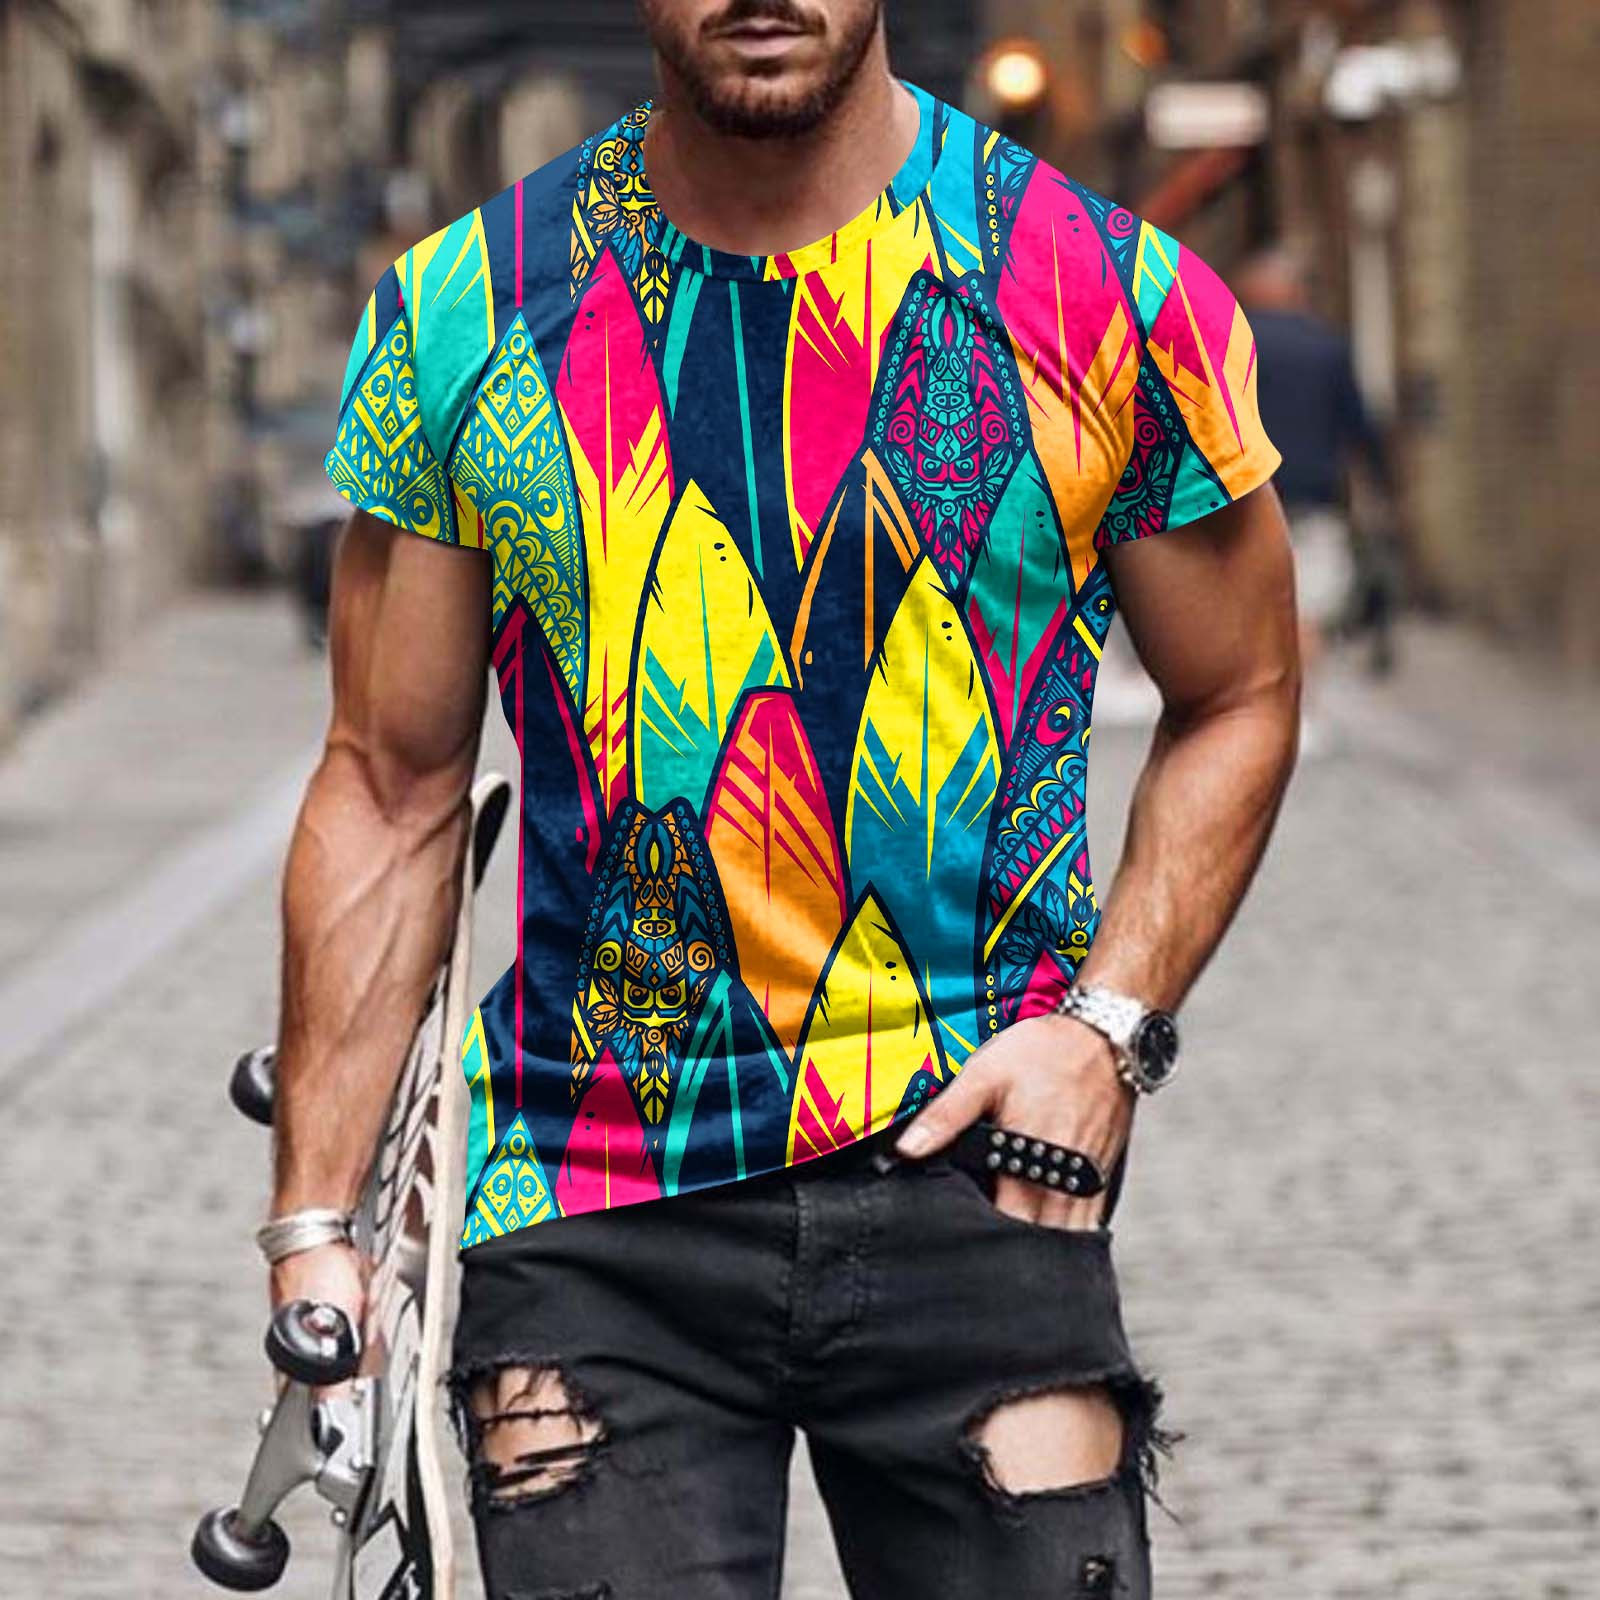 hopeusnice Men's Summer T-Shirt Colorful Feather Print Short Sleeve ...